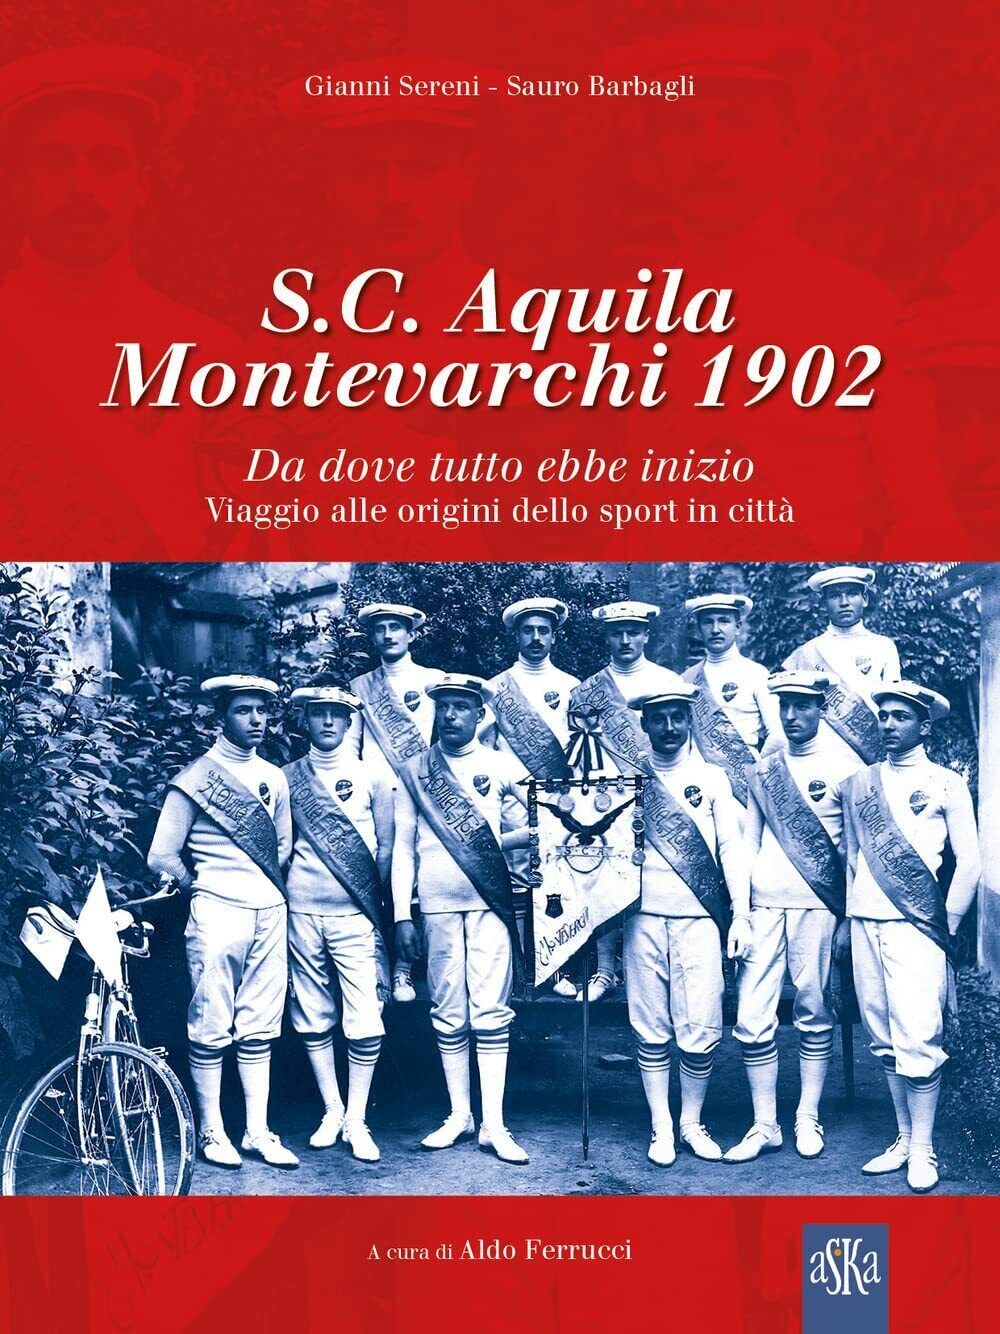 S.C. Aquila Montevarchi 1902 - Sauro Barbagli, Gianni Sereni - 2022